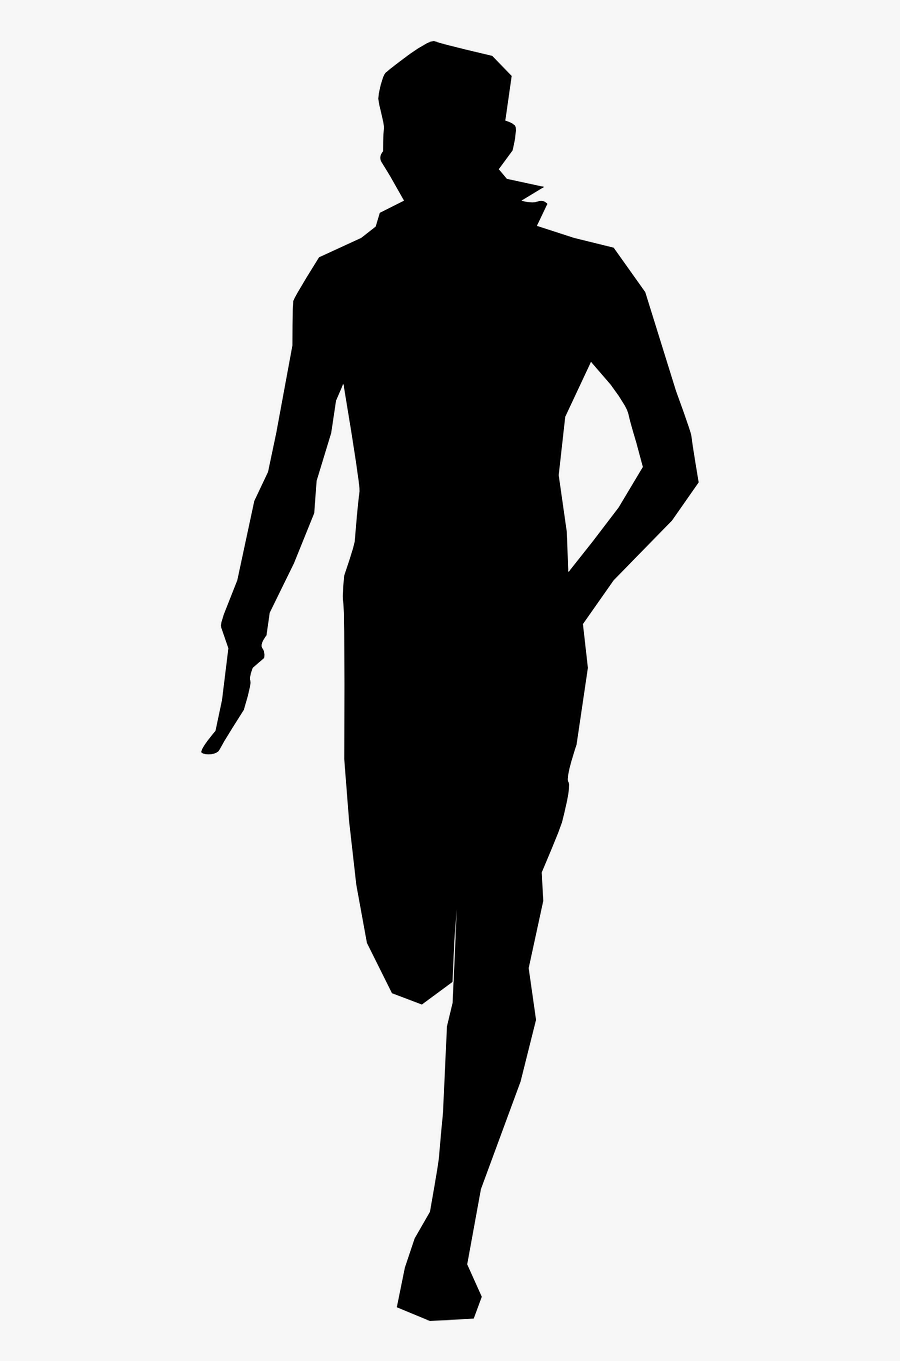 Man Run Person Male Running Png Image - Run Man Black Clipart, Transparent Clipart